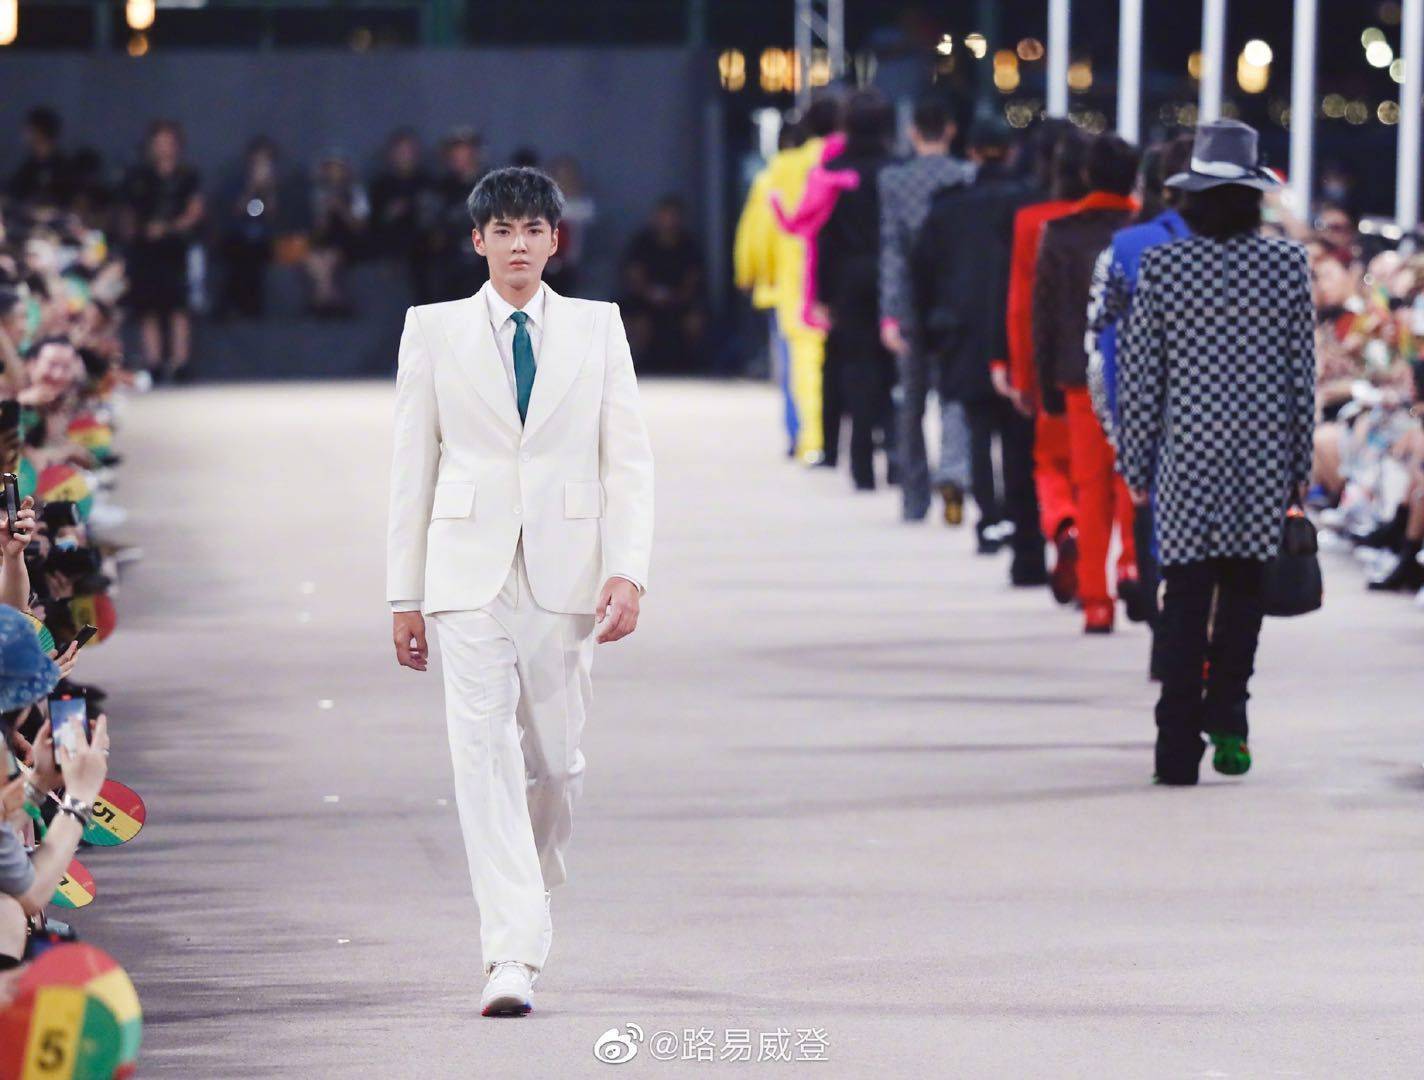 Naga  on Twitter Louis Vuitton weibo update with brand ambassador Kris  Wu  httpstcommfFtX9d5s  Twitter